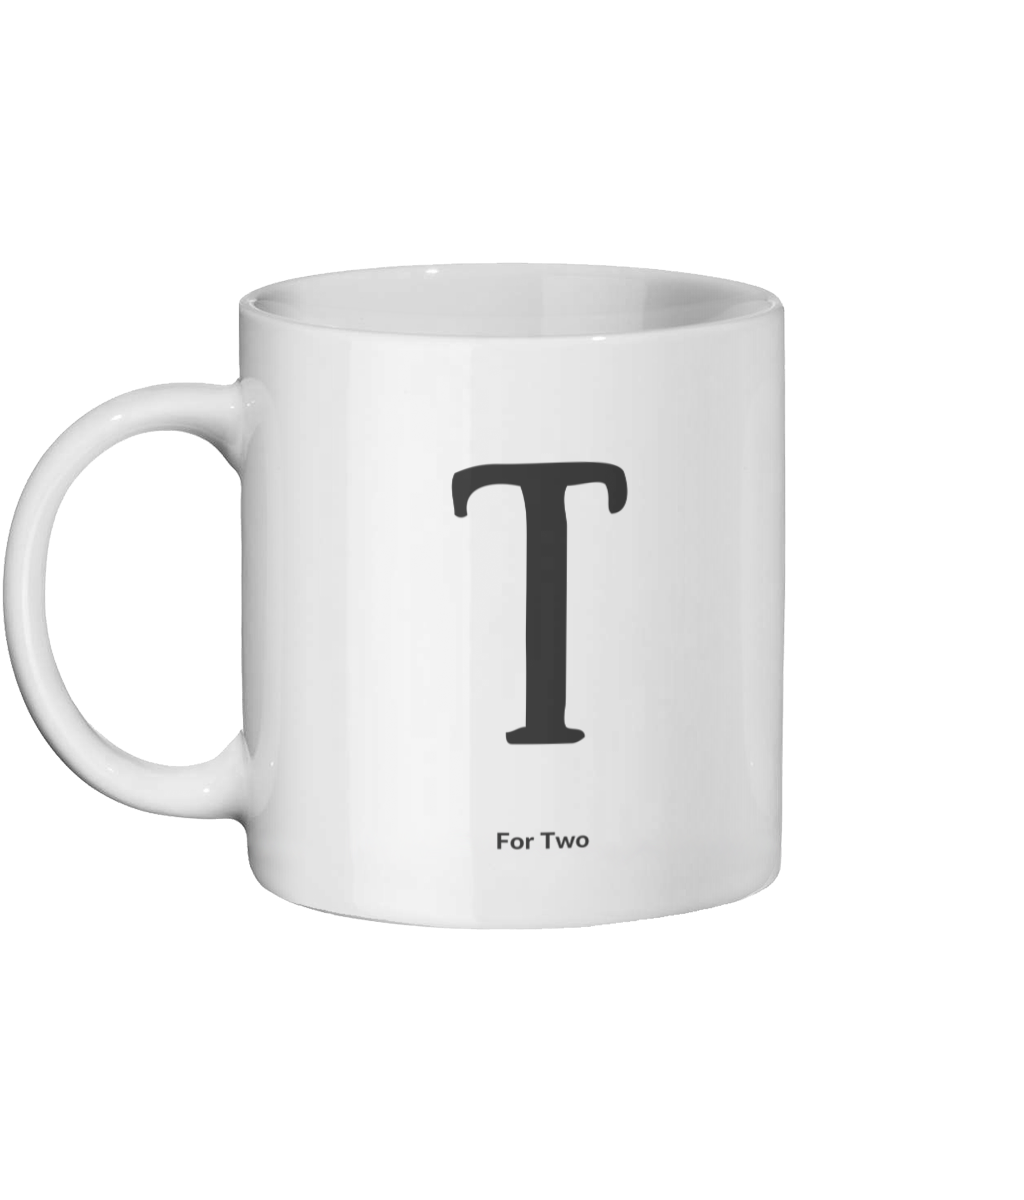 T for Two Mug Left-side